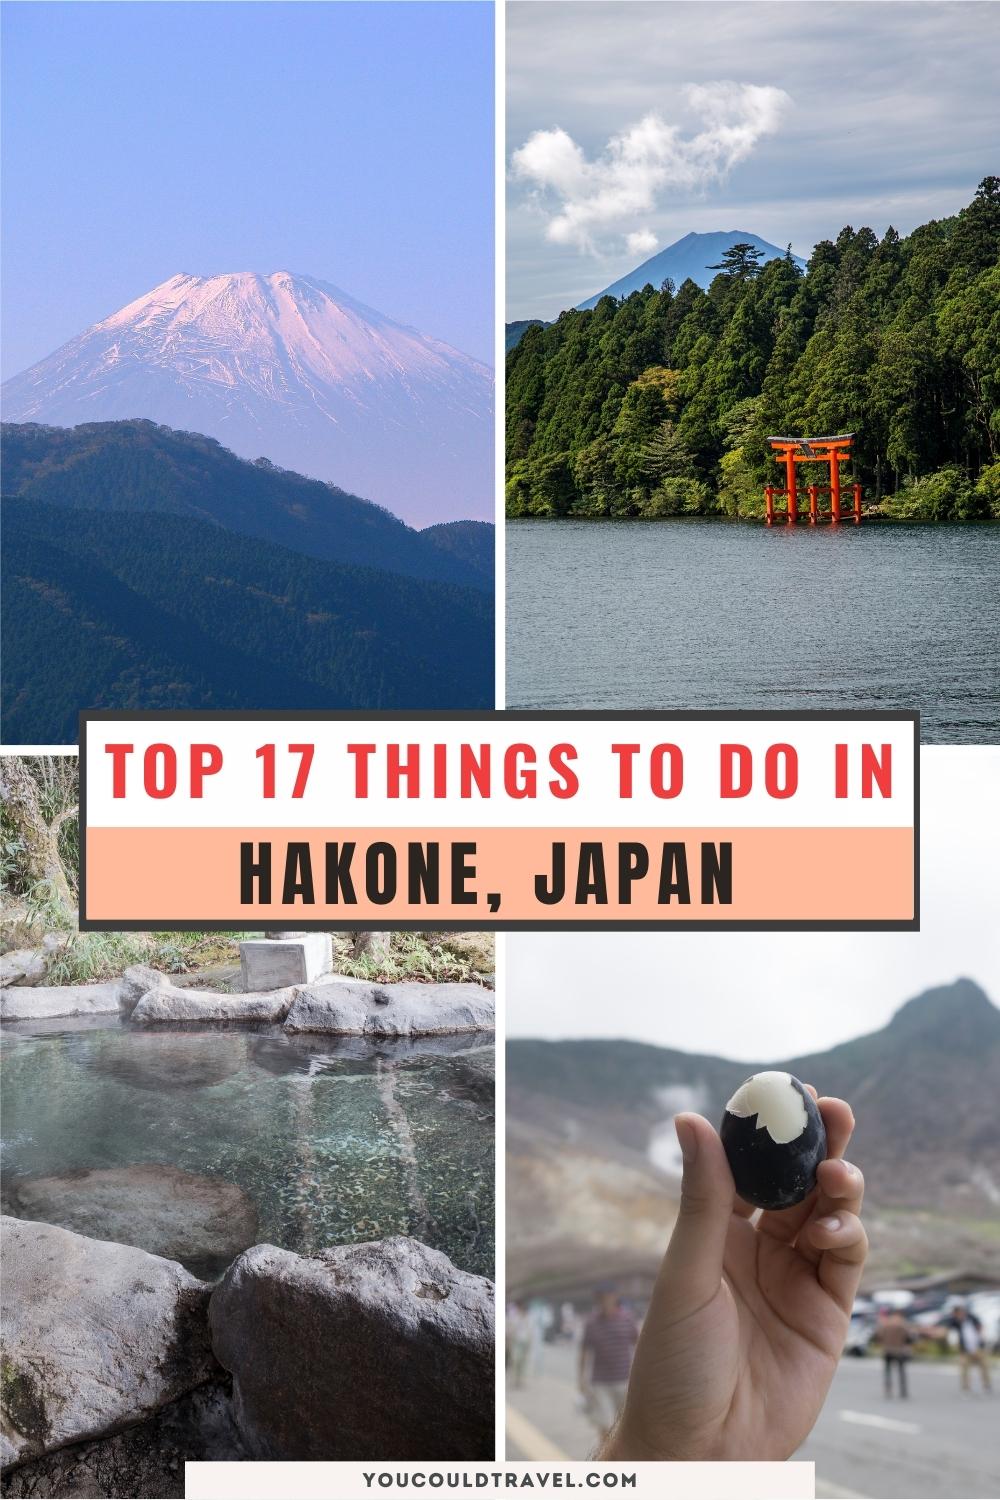 Top 17 things to do in Hakone, Japan